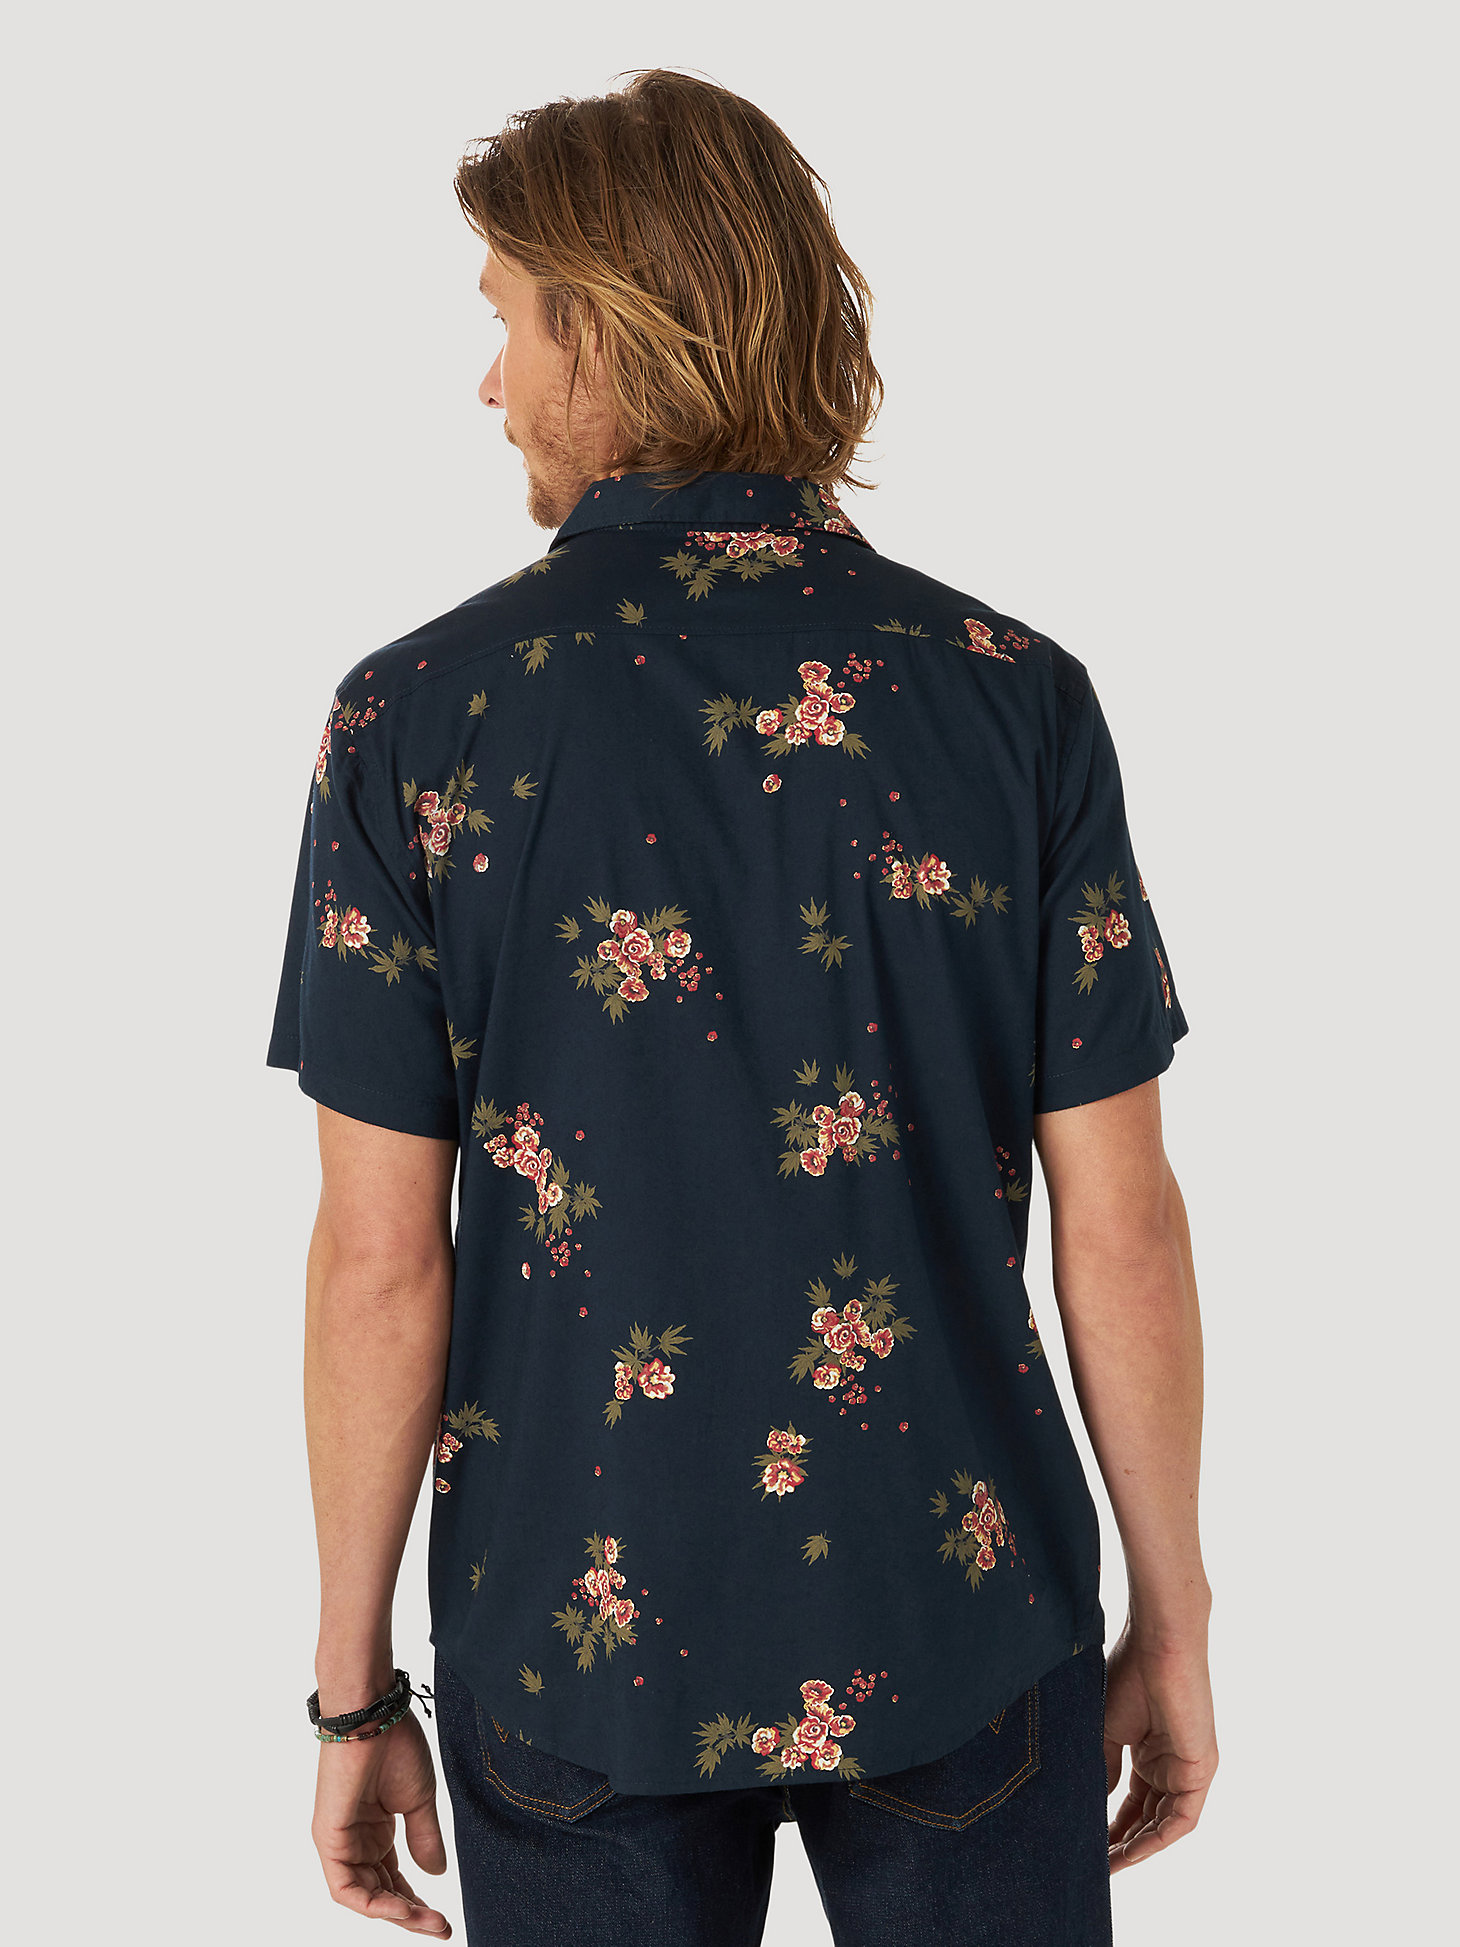 Billabong X Wrangler® Rose Garden Short Sleeve Shirt in Indigo alternative view 2